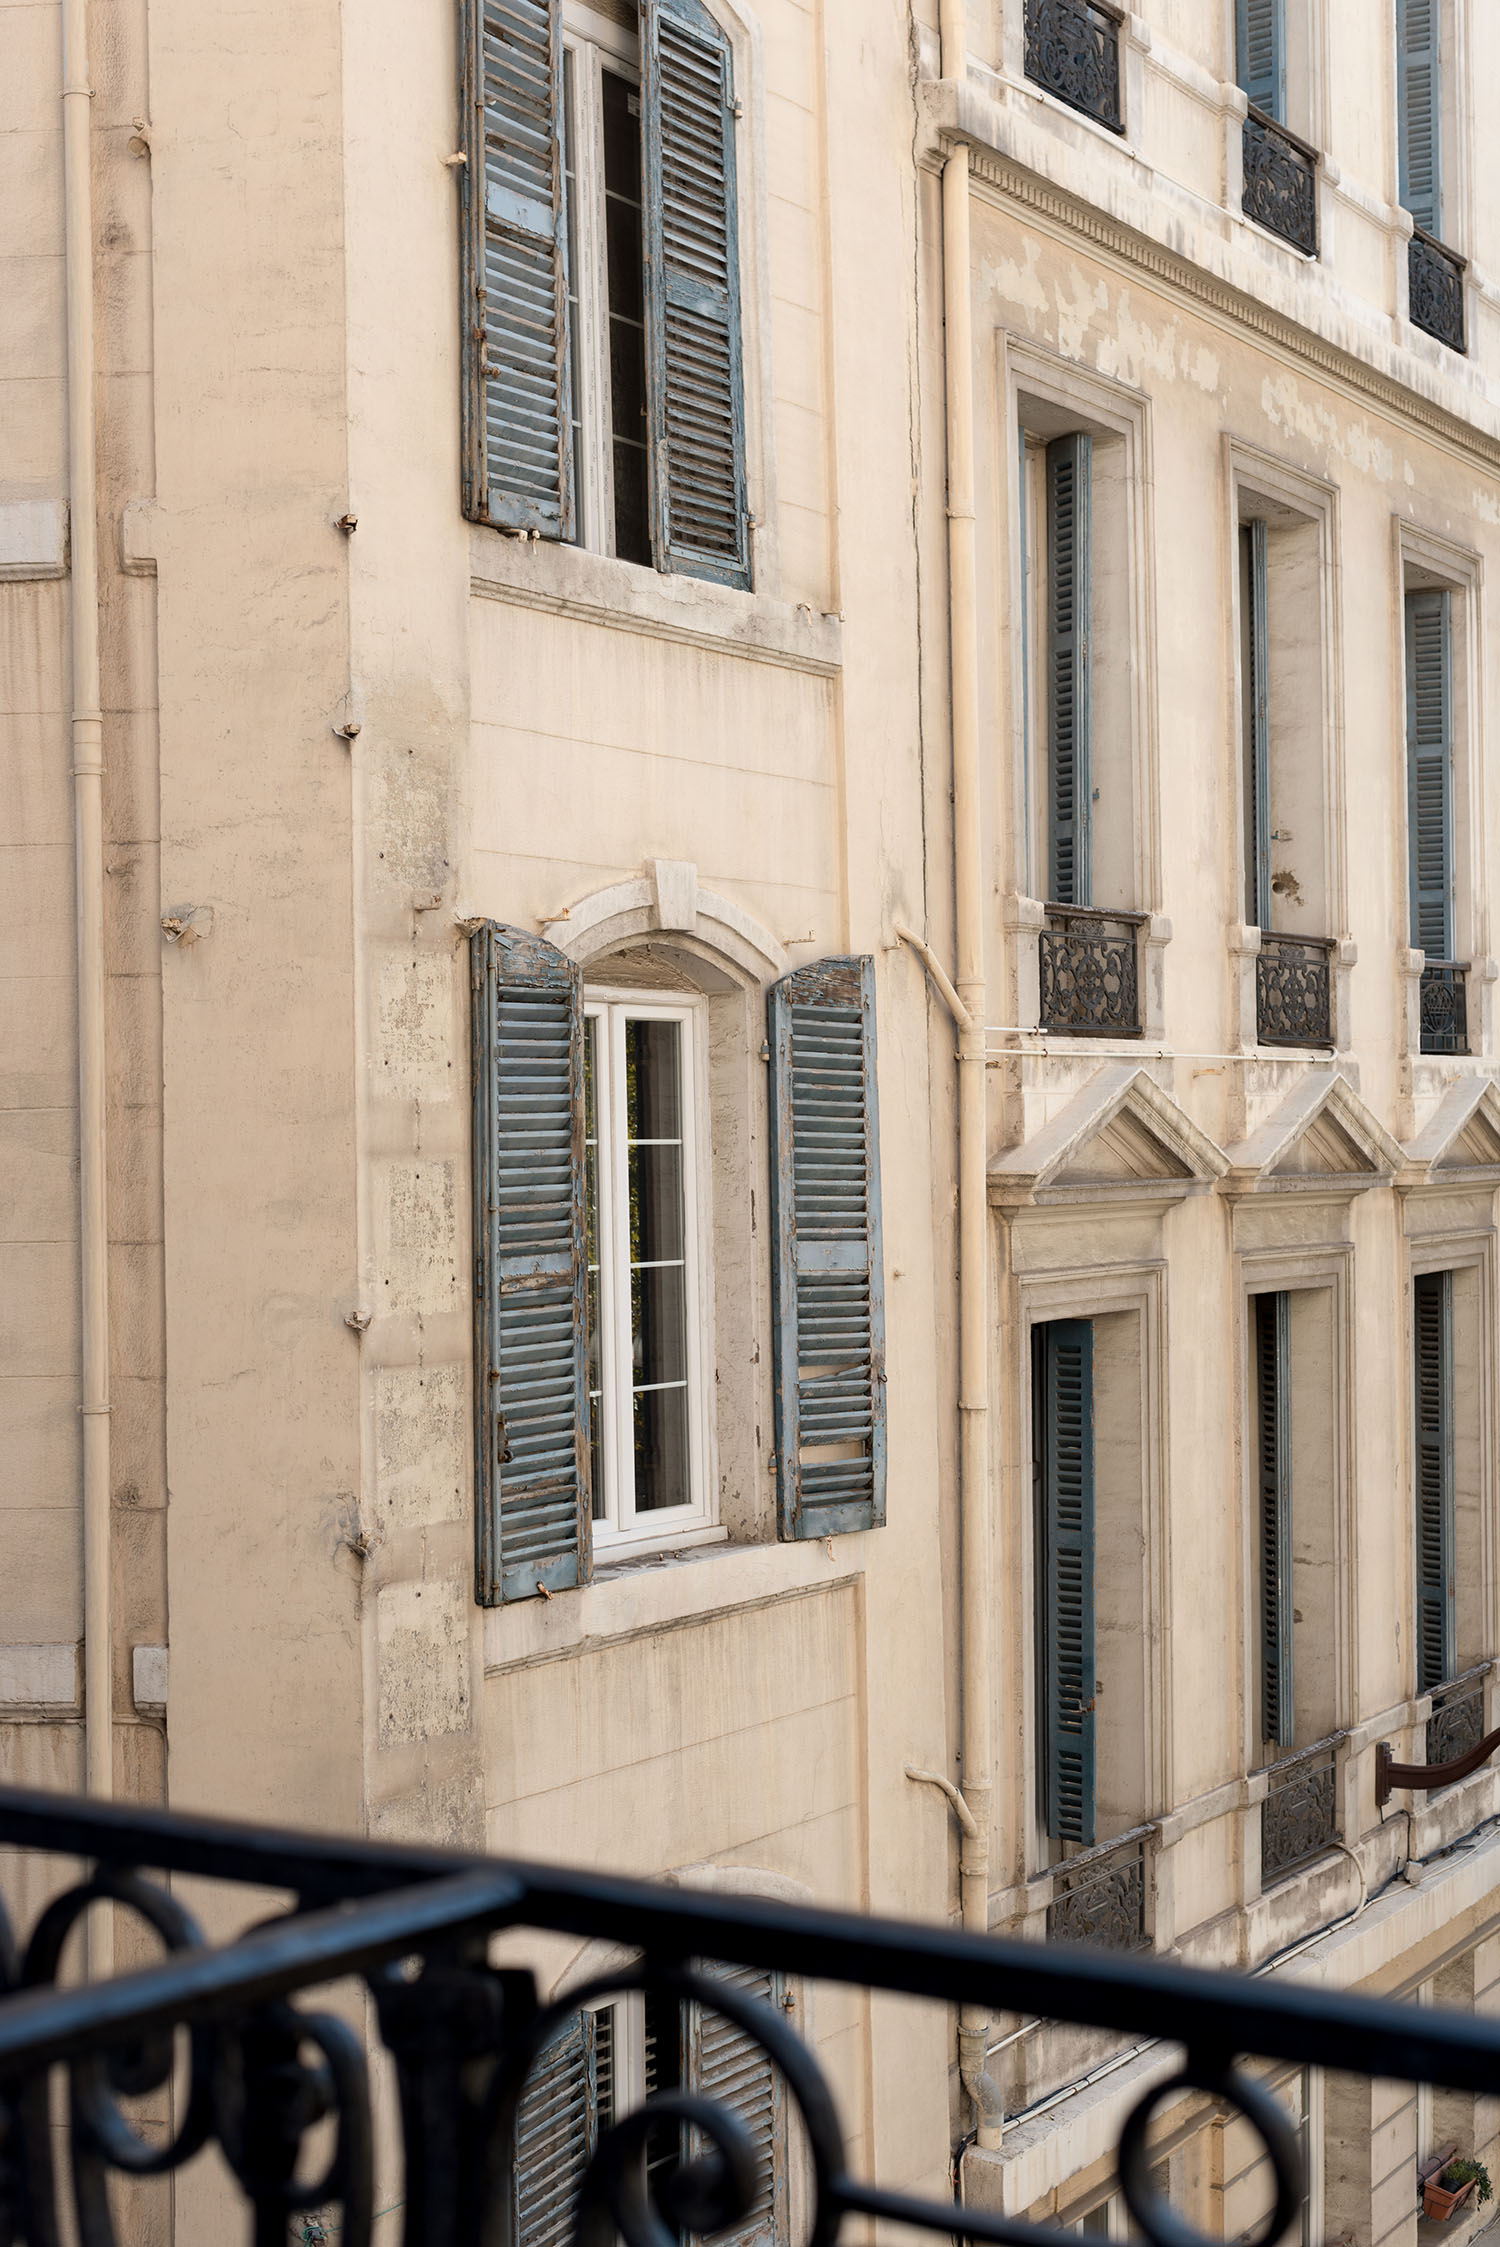 Coco & Vera - Balcony view of historic building in Noailles, Marseille